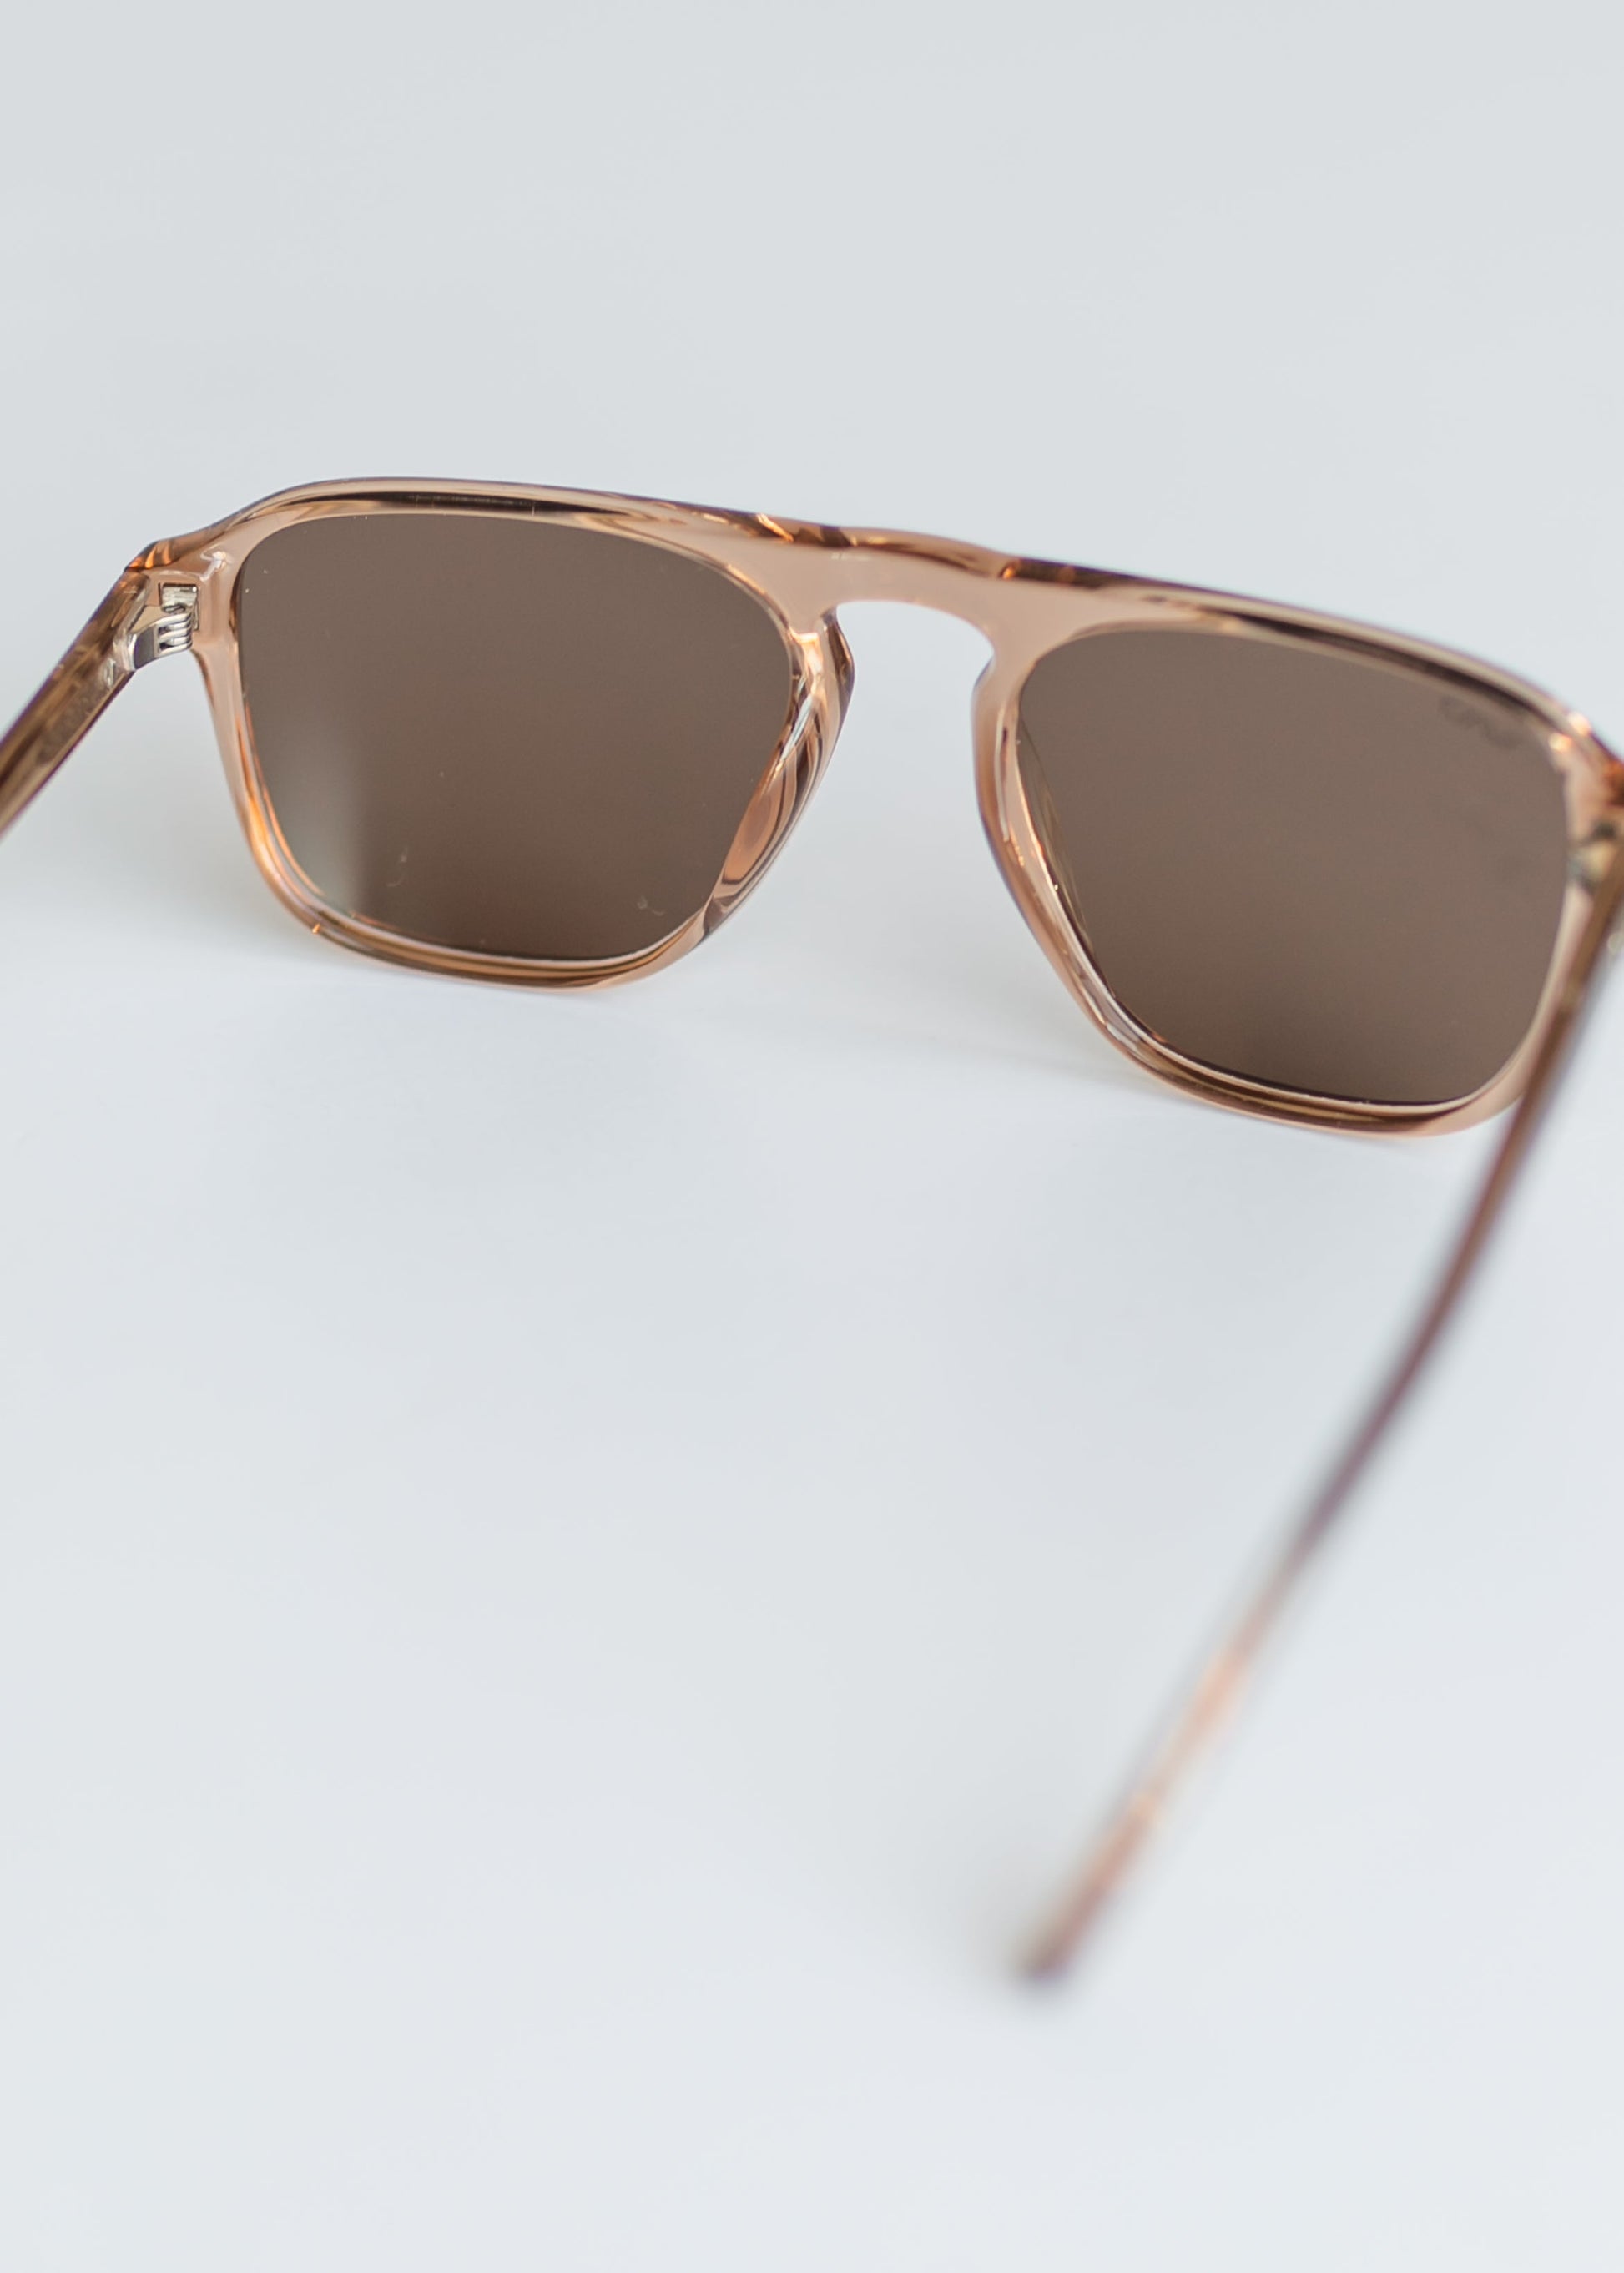 Crystal Brown Aviator Sunglasses Accessories